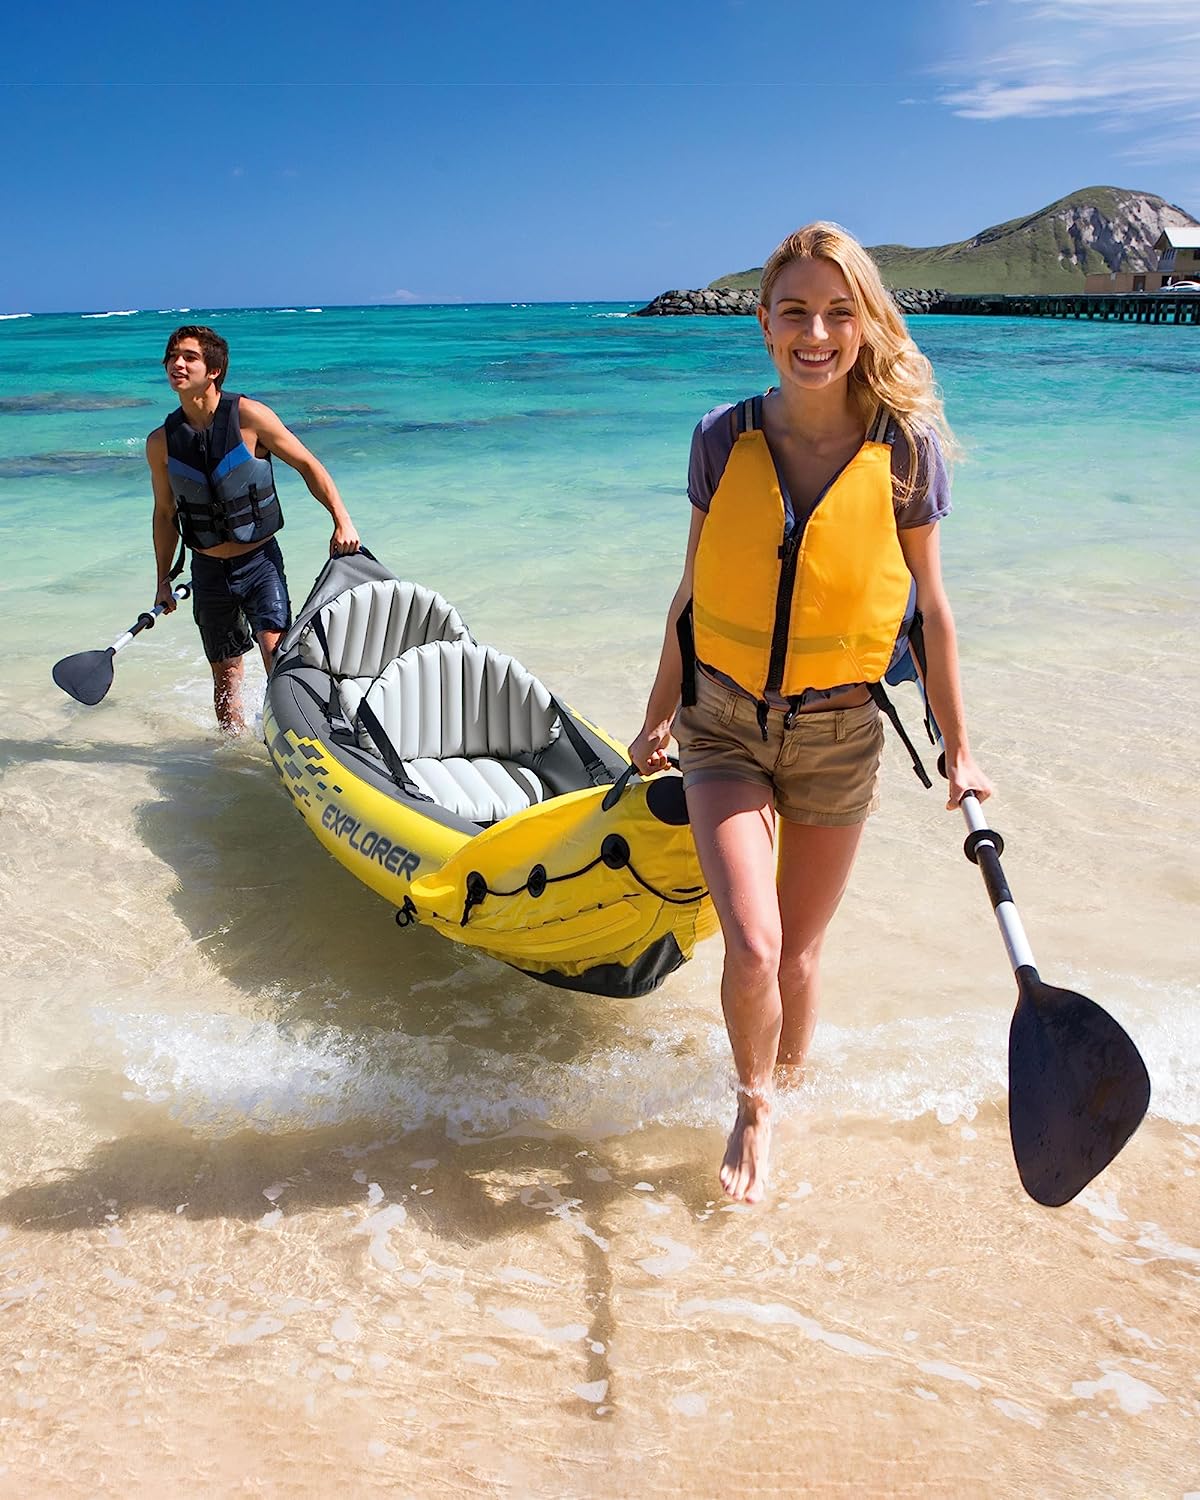 2-Person Inflatable Kayak Set